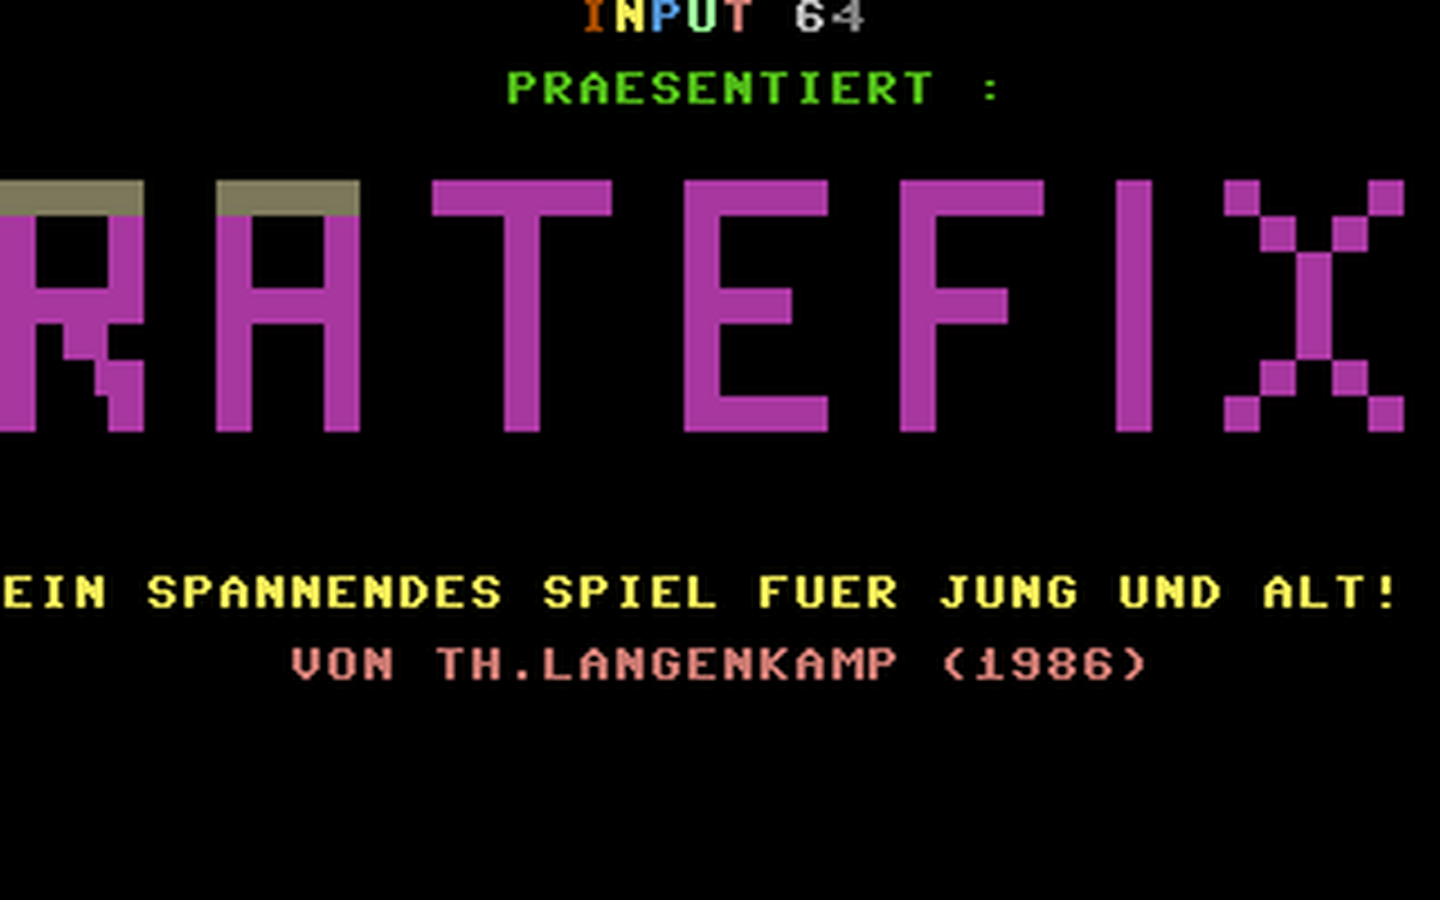 C64 GameBase Ratefix Verlag_Heinz_Heise_GmbH/Input_64 1986